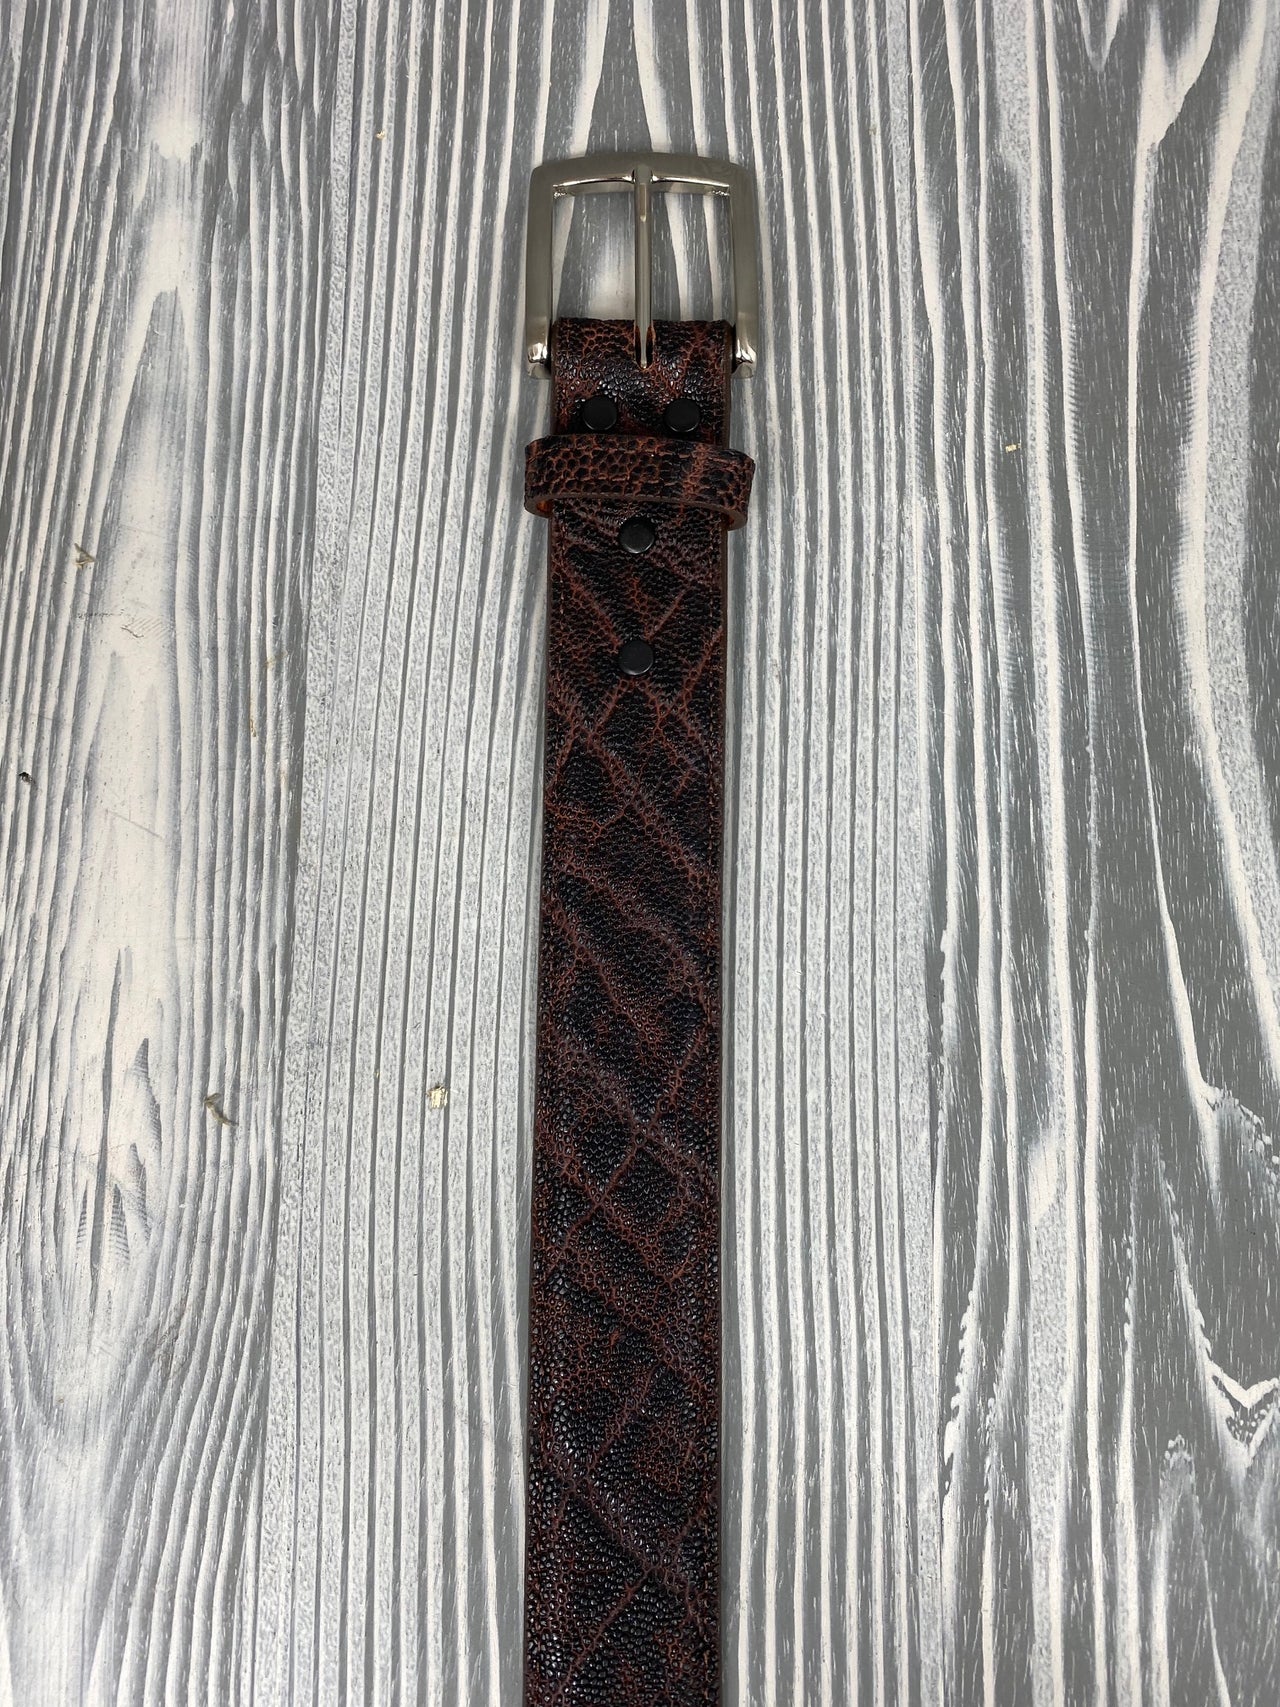 Black Ostrich Leather Belt Strap - 1 1/4 > 1 Taper